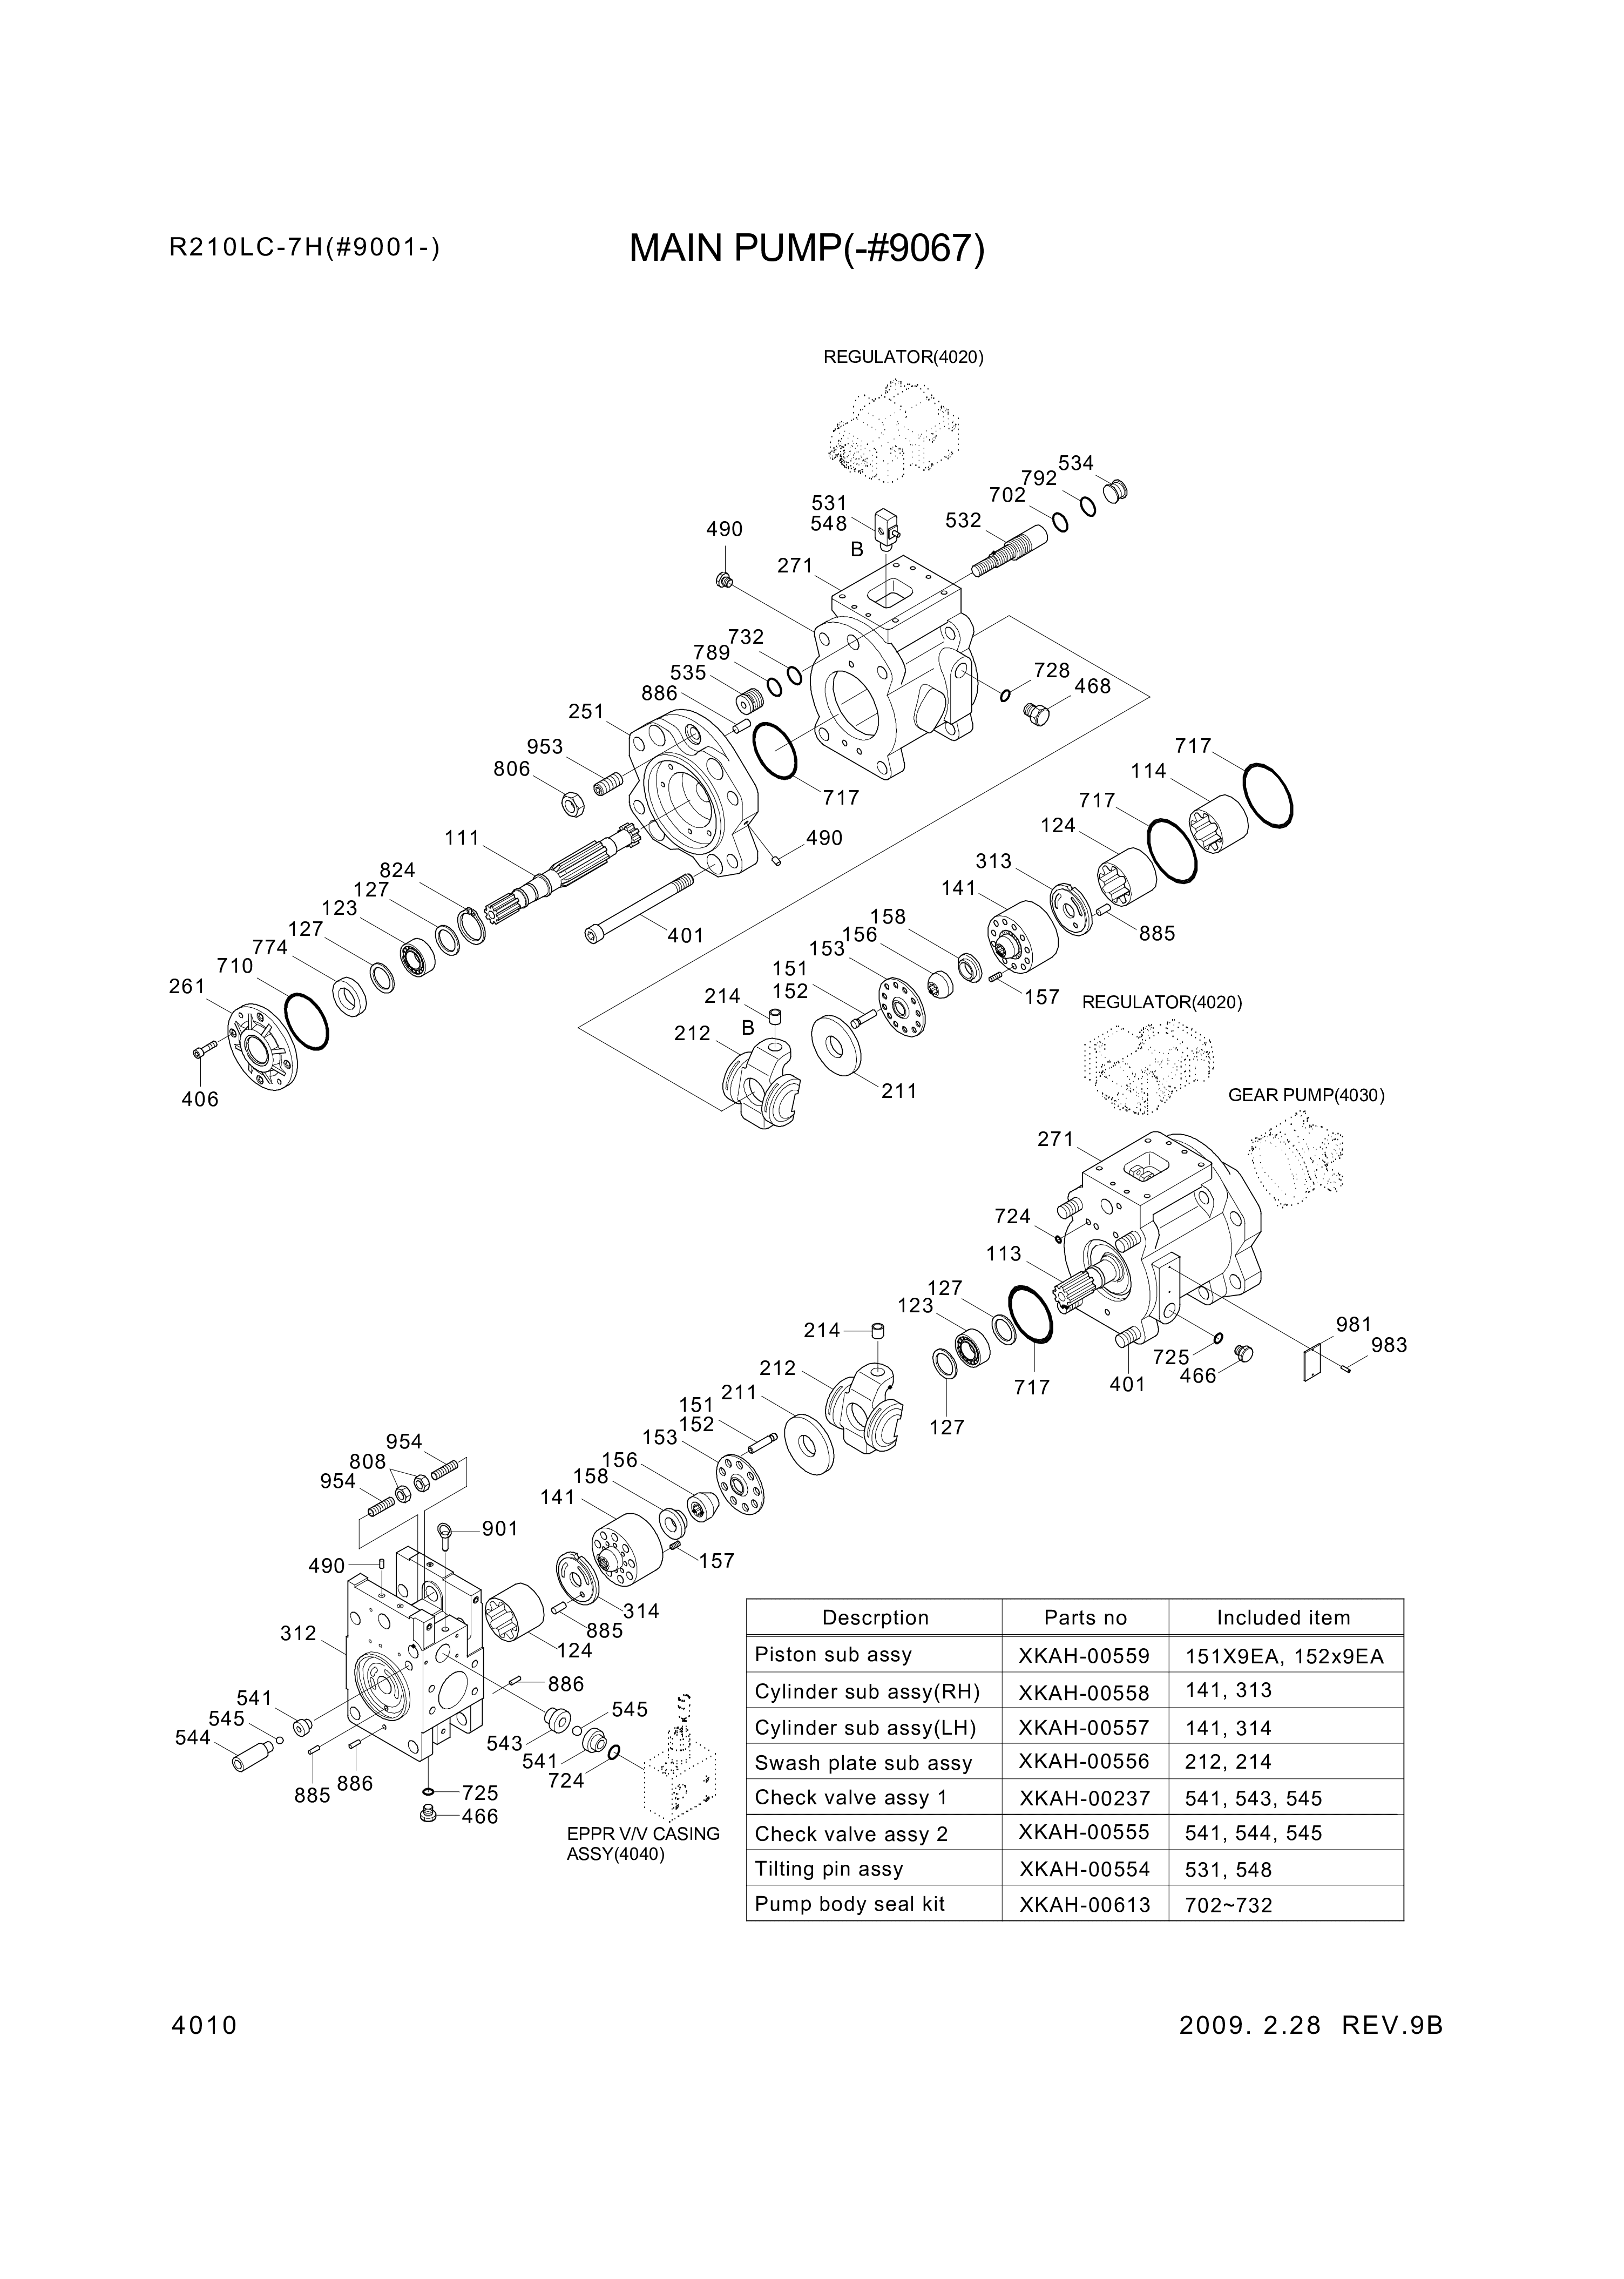 drawing for Hyundai Construction Equipment XKAH-00236 - CHECK VALVE ASSY-2 (figure 3)